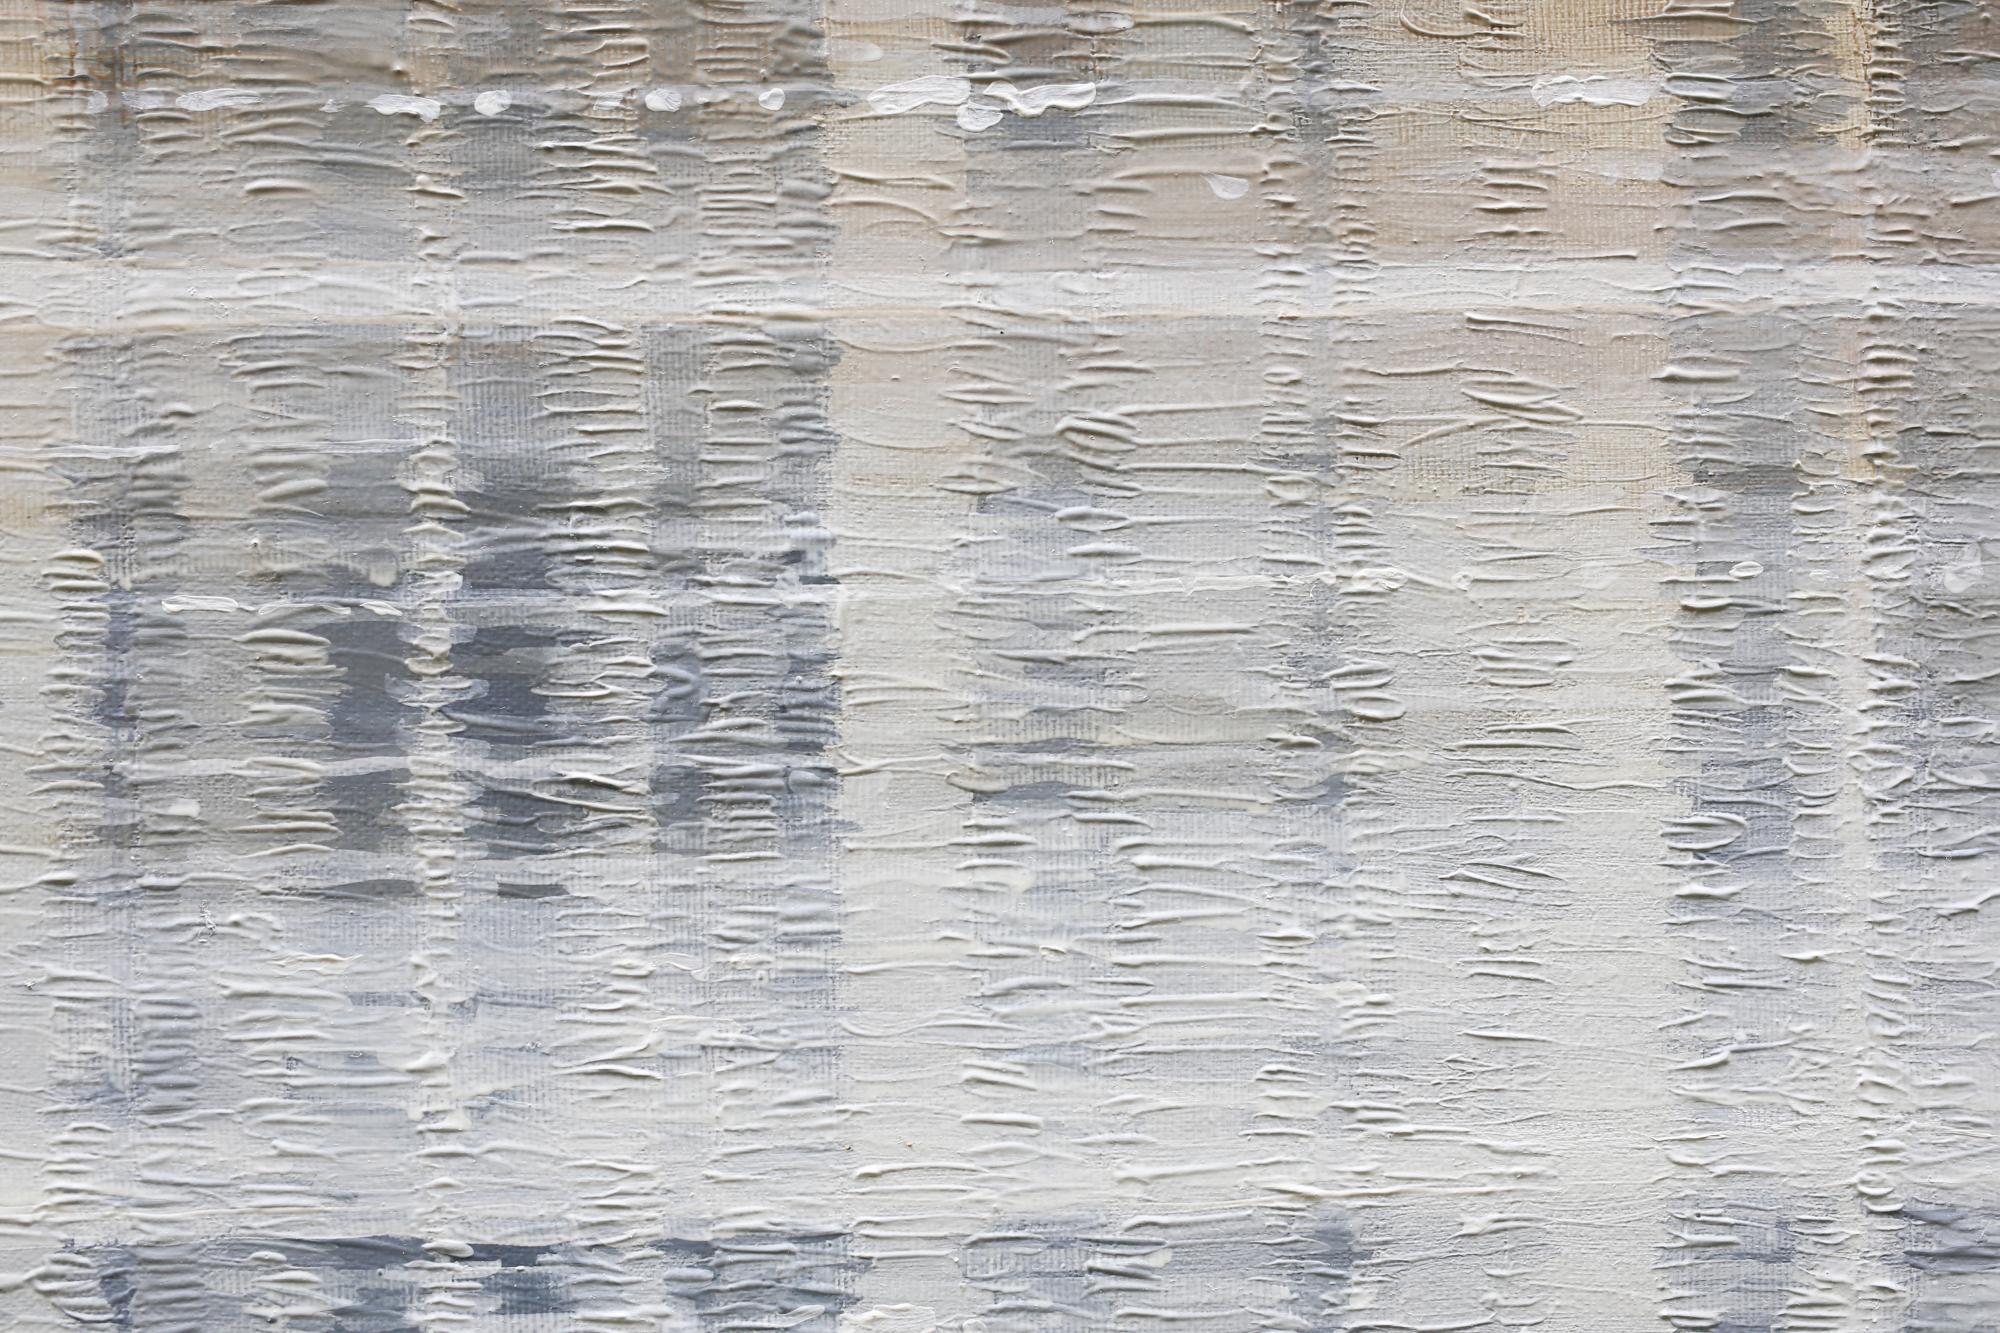 REFLECTIONS 1 - Contemporary Atmospheric Landscape,  Modern Seascape Painting - Gray Landscape Painting by Grzegorz Wójcik